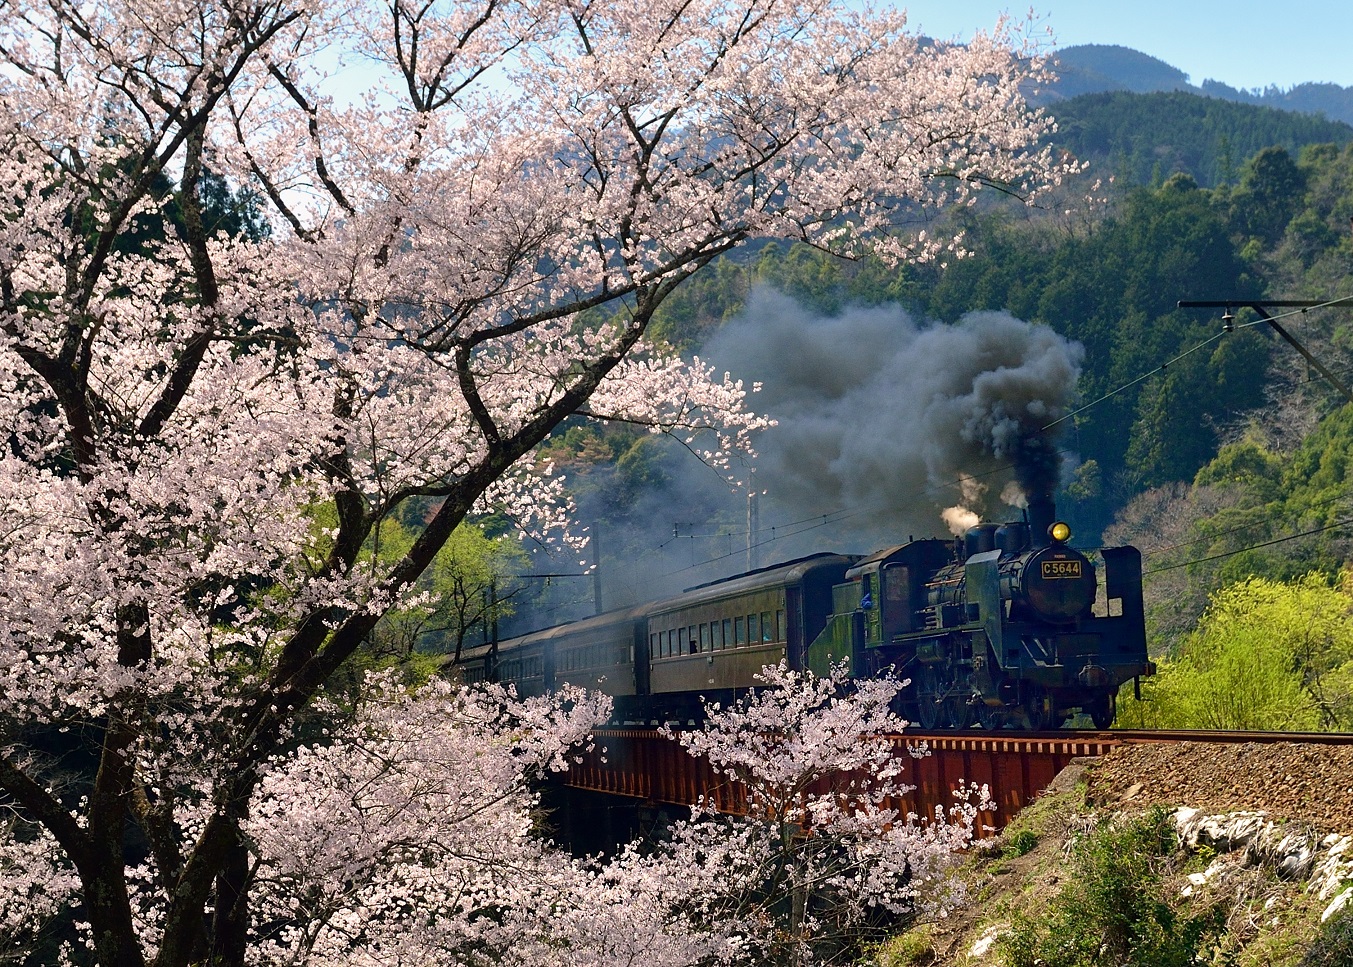 Sumata Gorge and Oigawa Railway - Explore Shizuoka